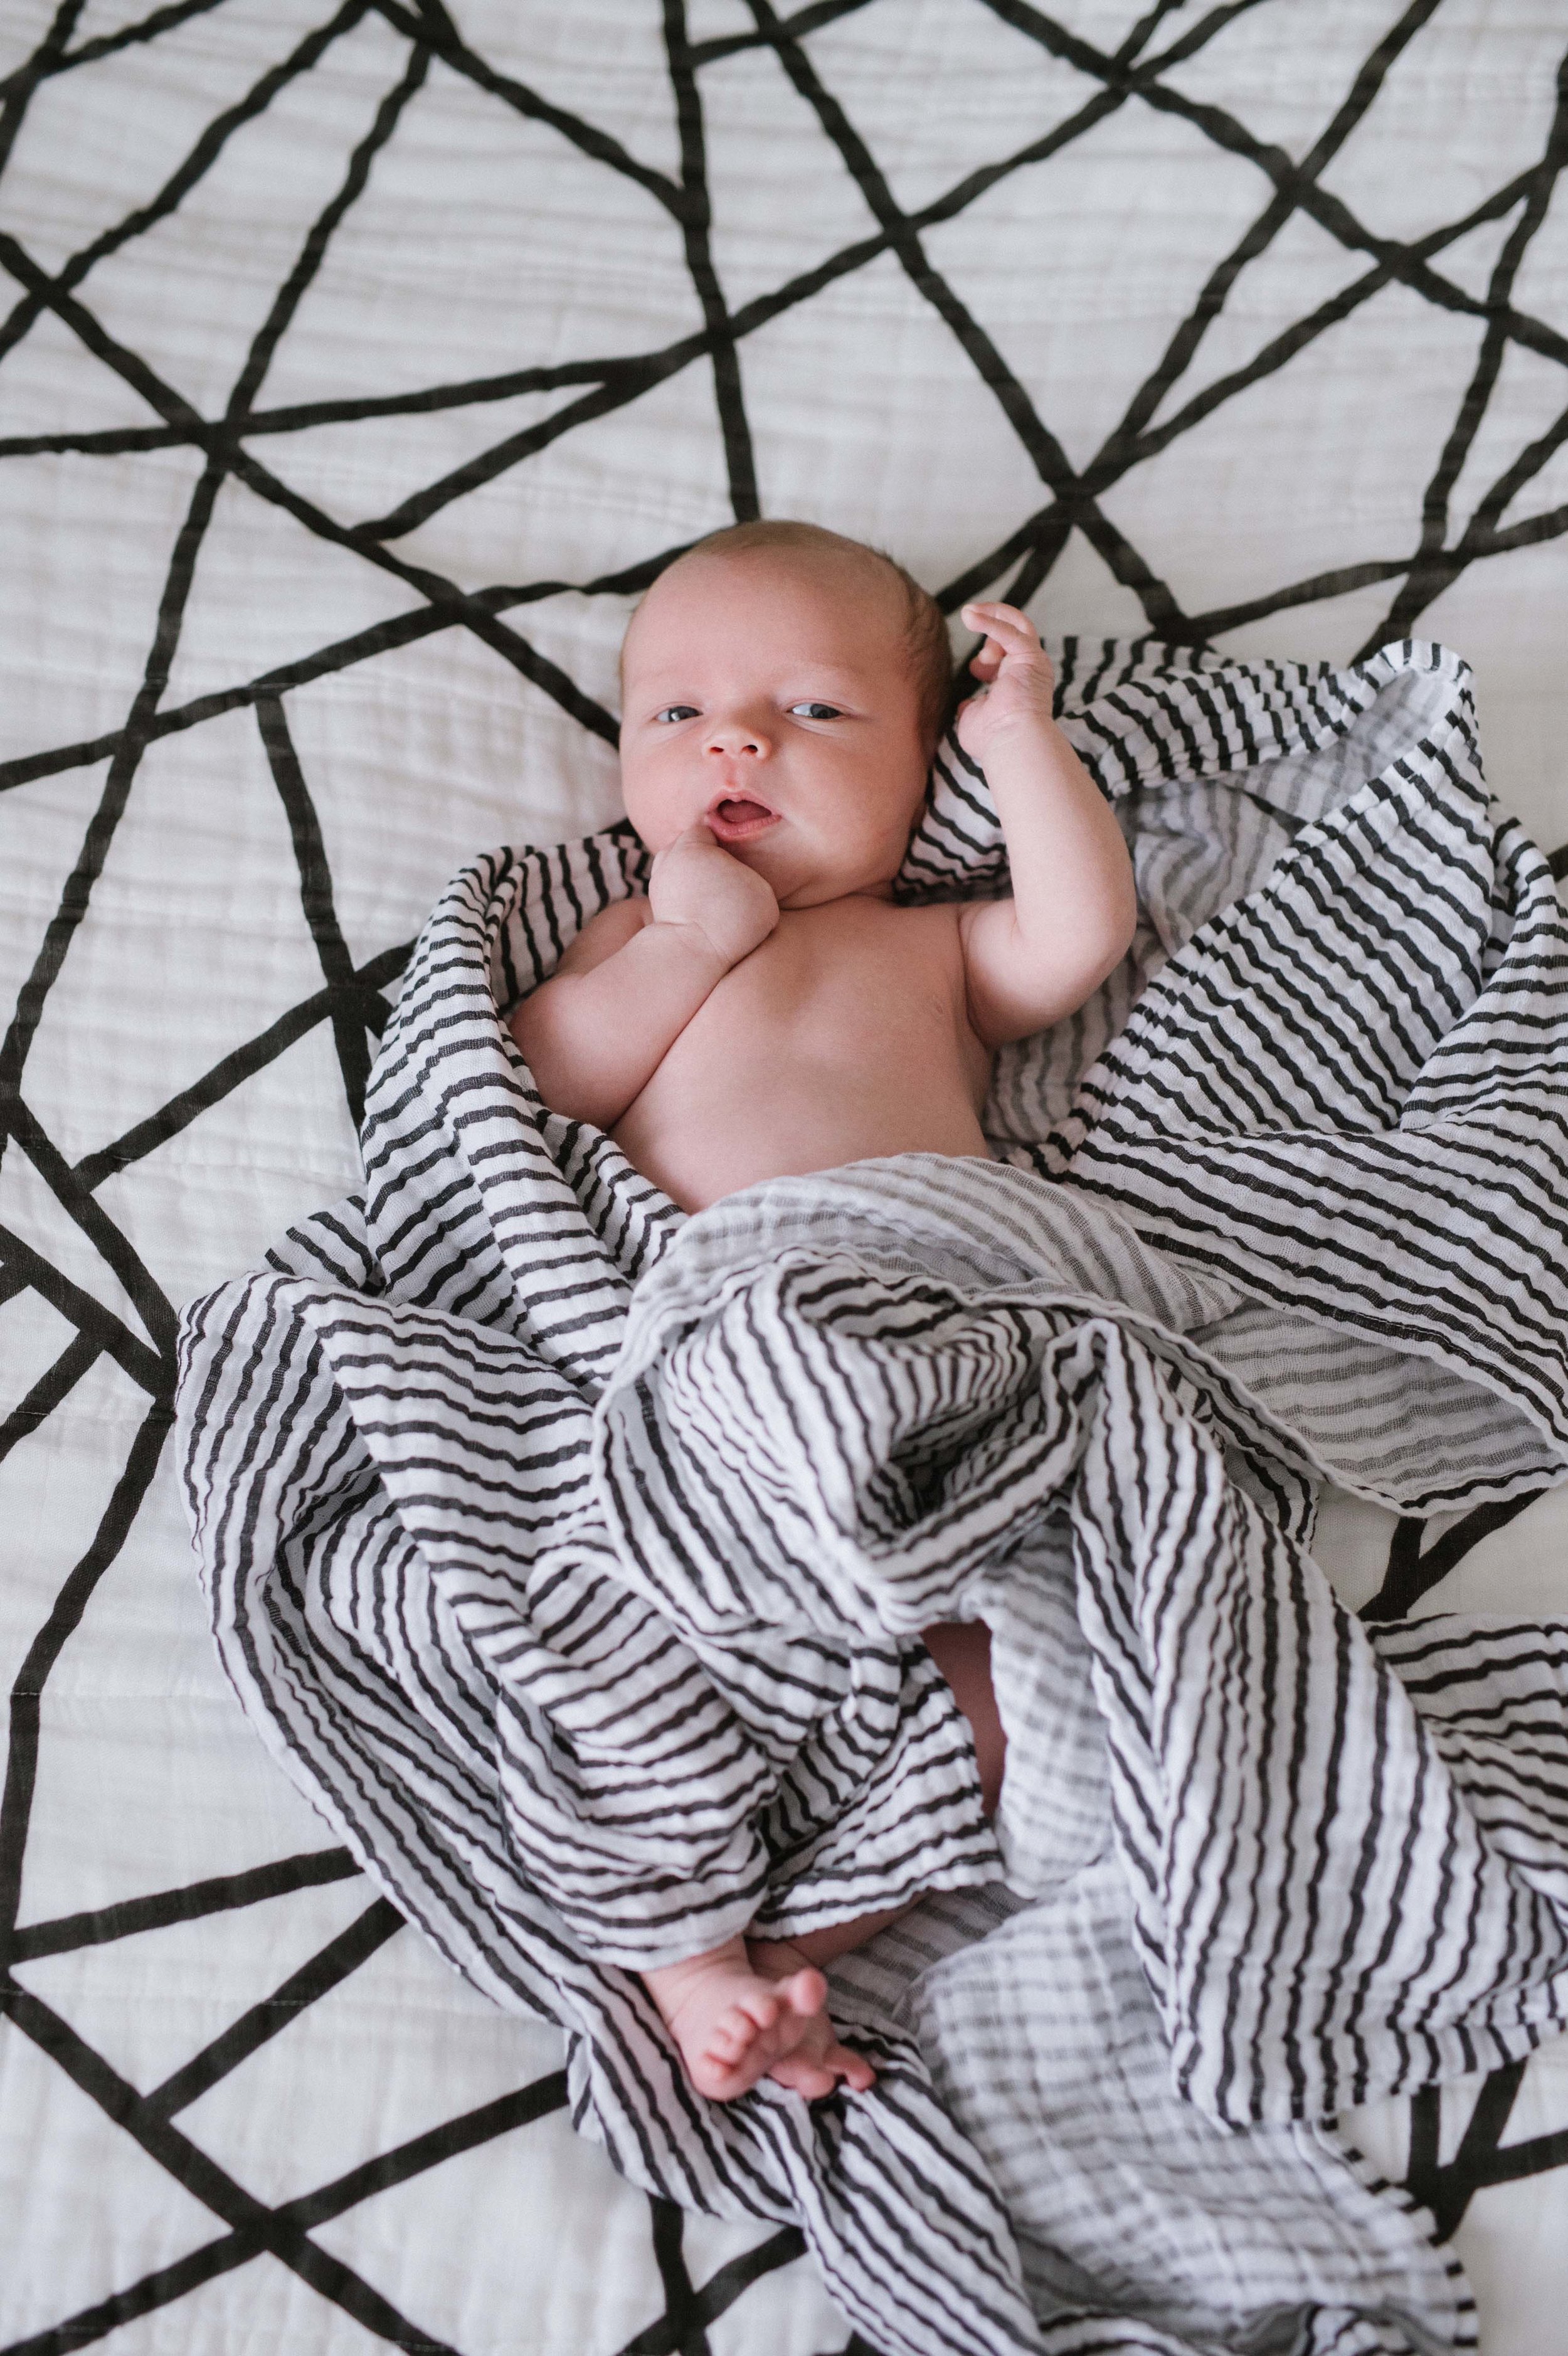 Christy-D-Swanberg-Photography-Calgary-maternity-lifestyle-portraits-family-newborn-baby-03.jpg